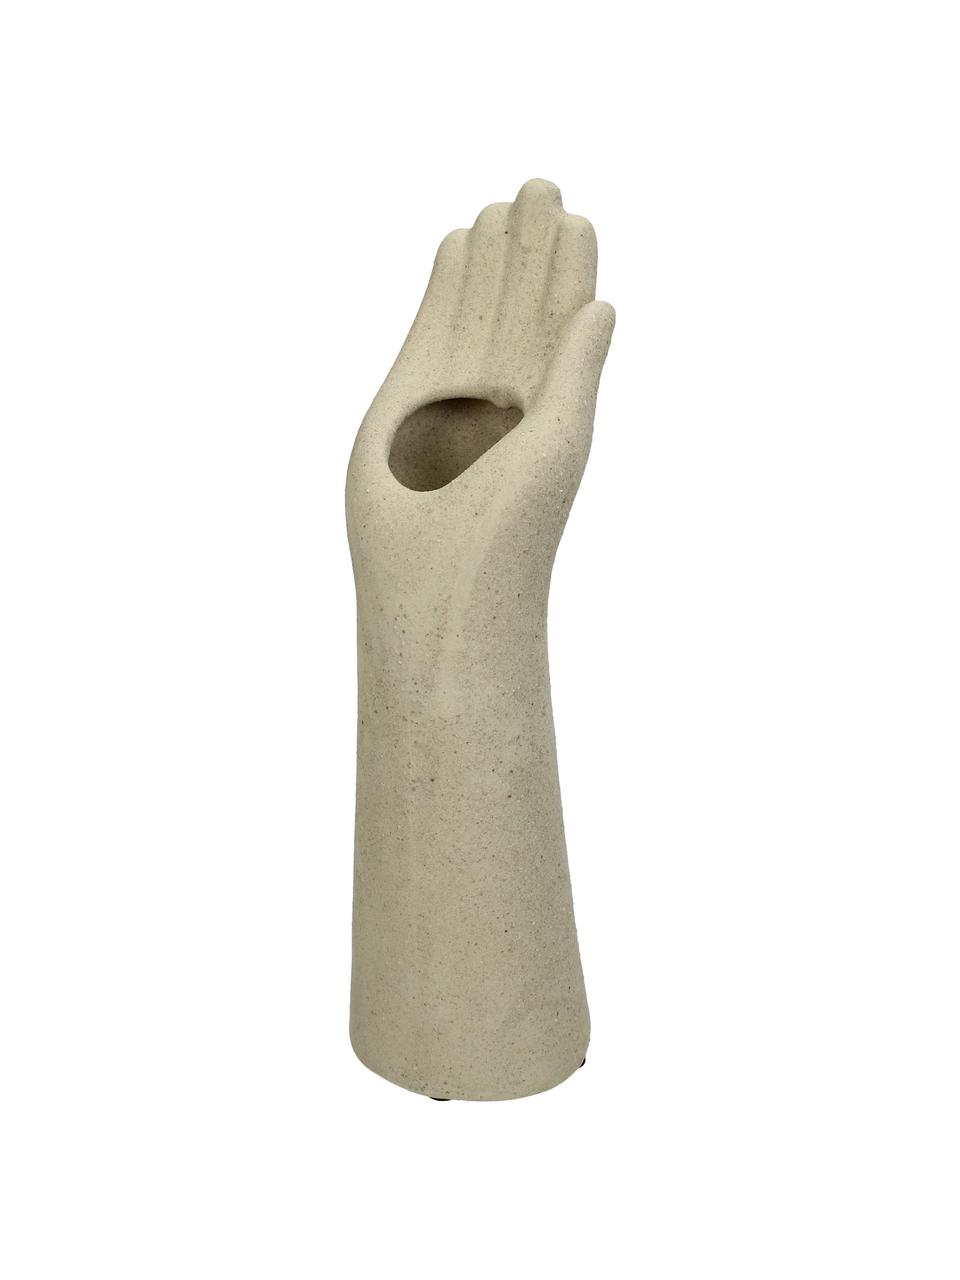 Kameninová váza Hand, Kamenina, Béžová, Š 8 cm, V 25 cm